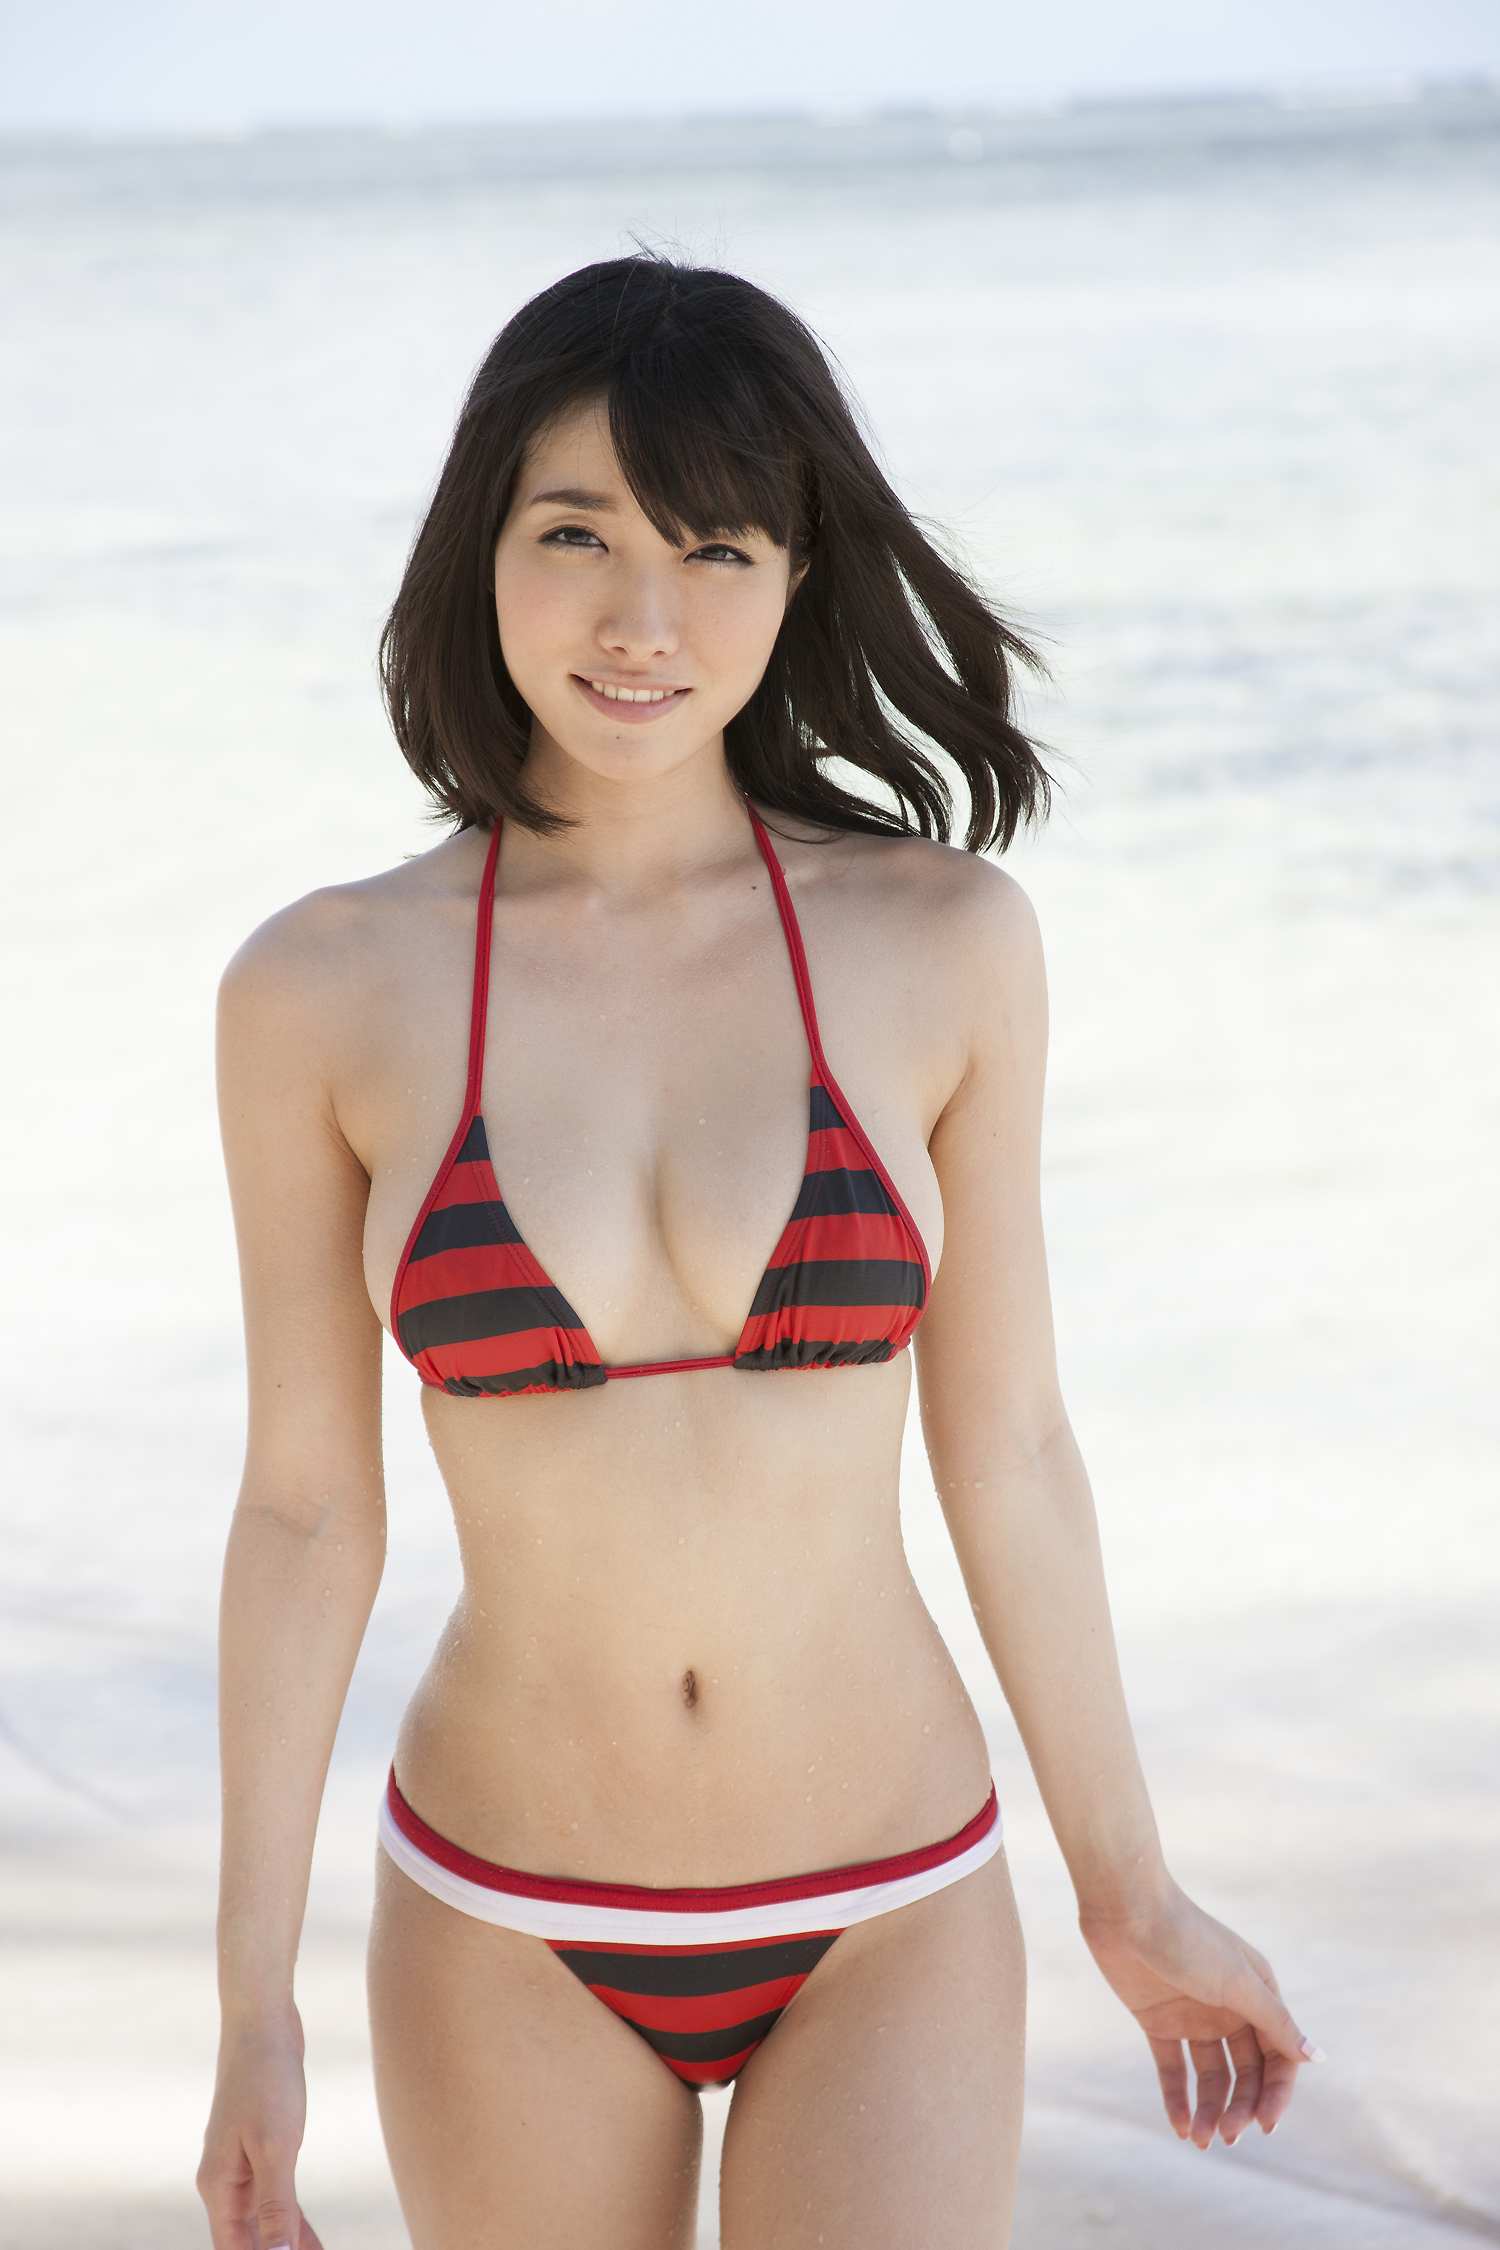 Koyuki bikini